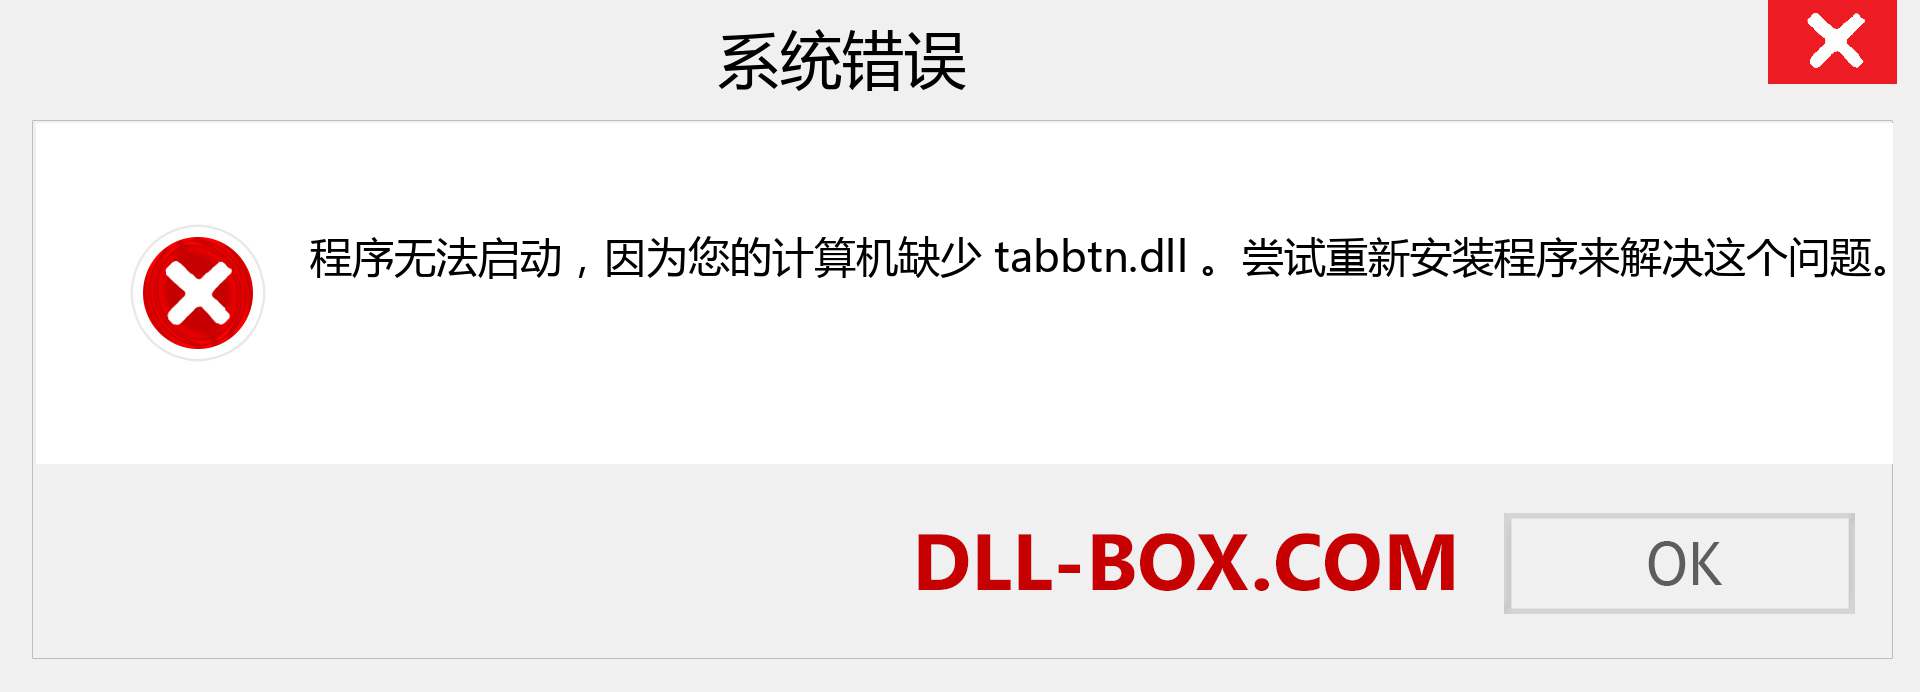 tabbtn.dll 文件丢失？。 适用于 Windows 7、8、10 的下载 - 修复 Windows、照片、图像上的 tabbtn dll 丢失错误